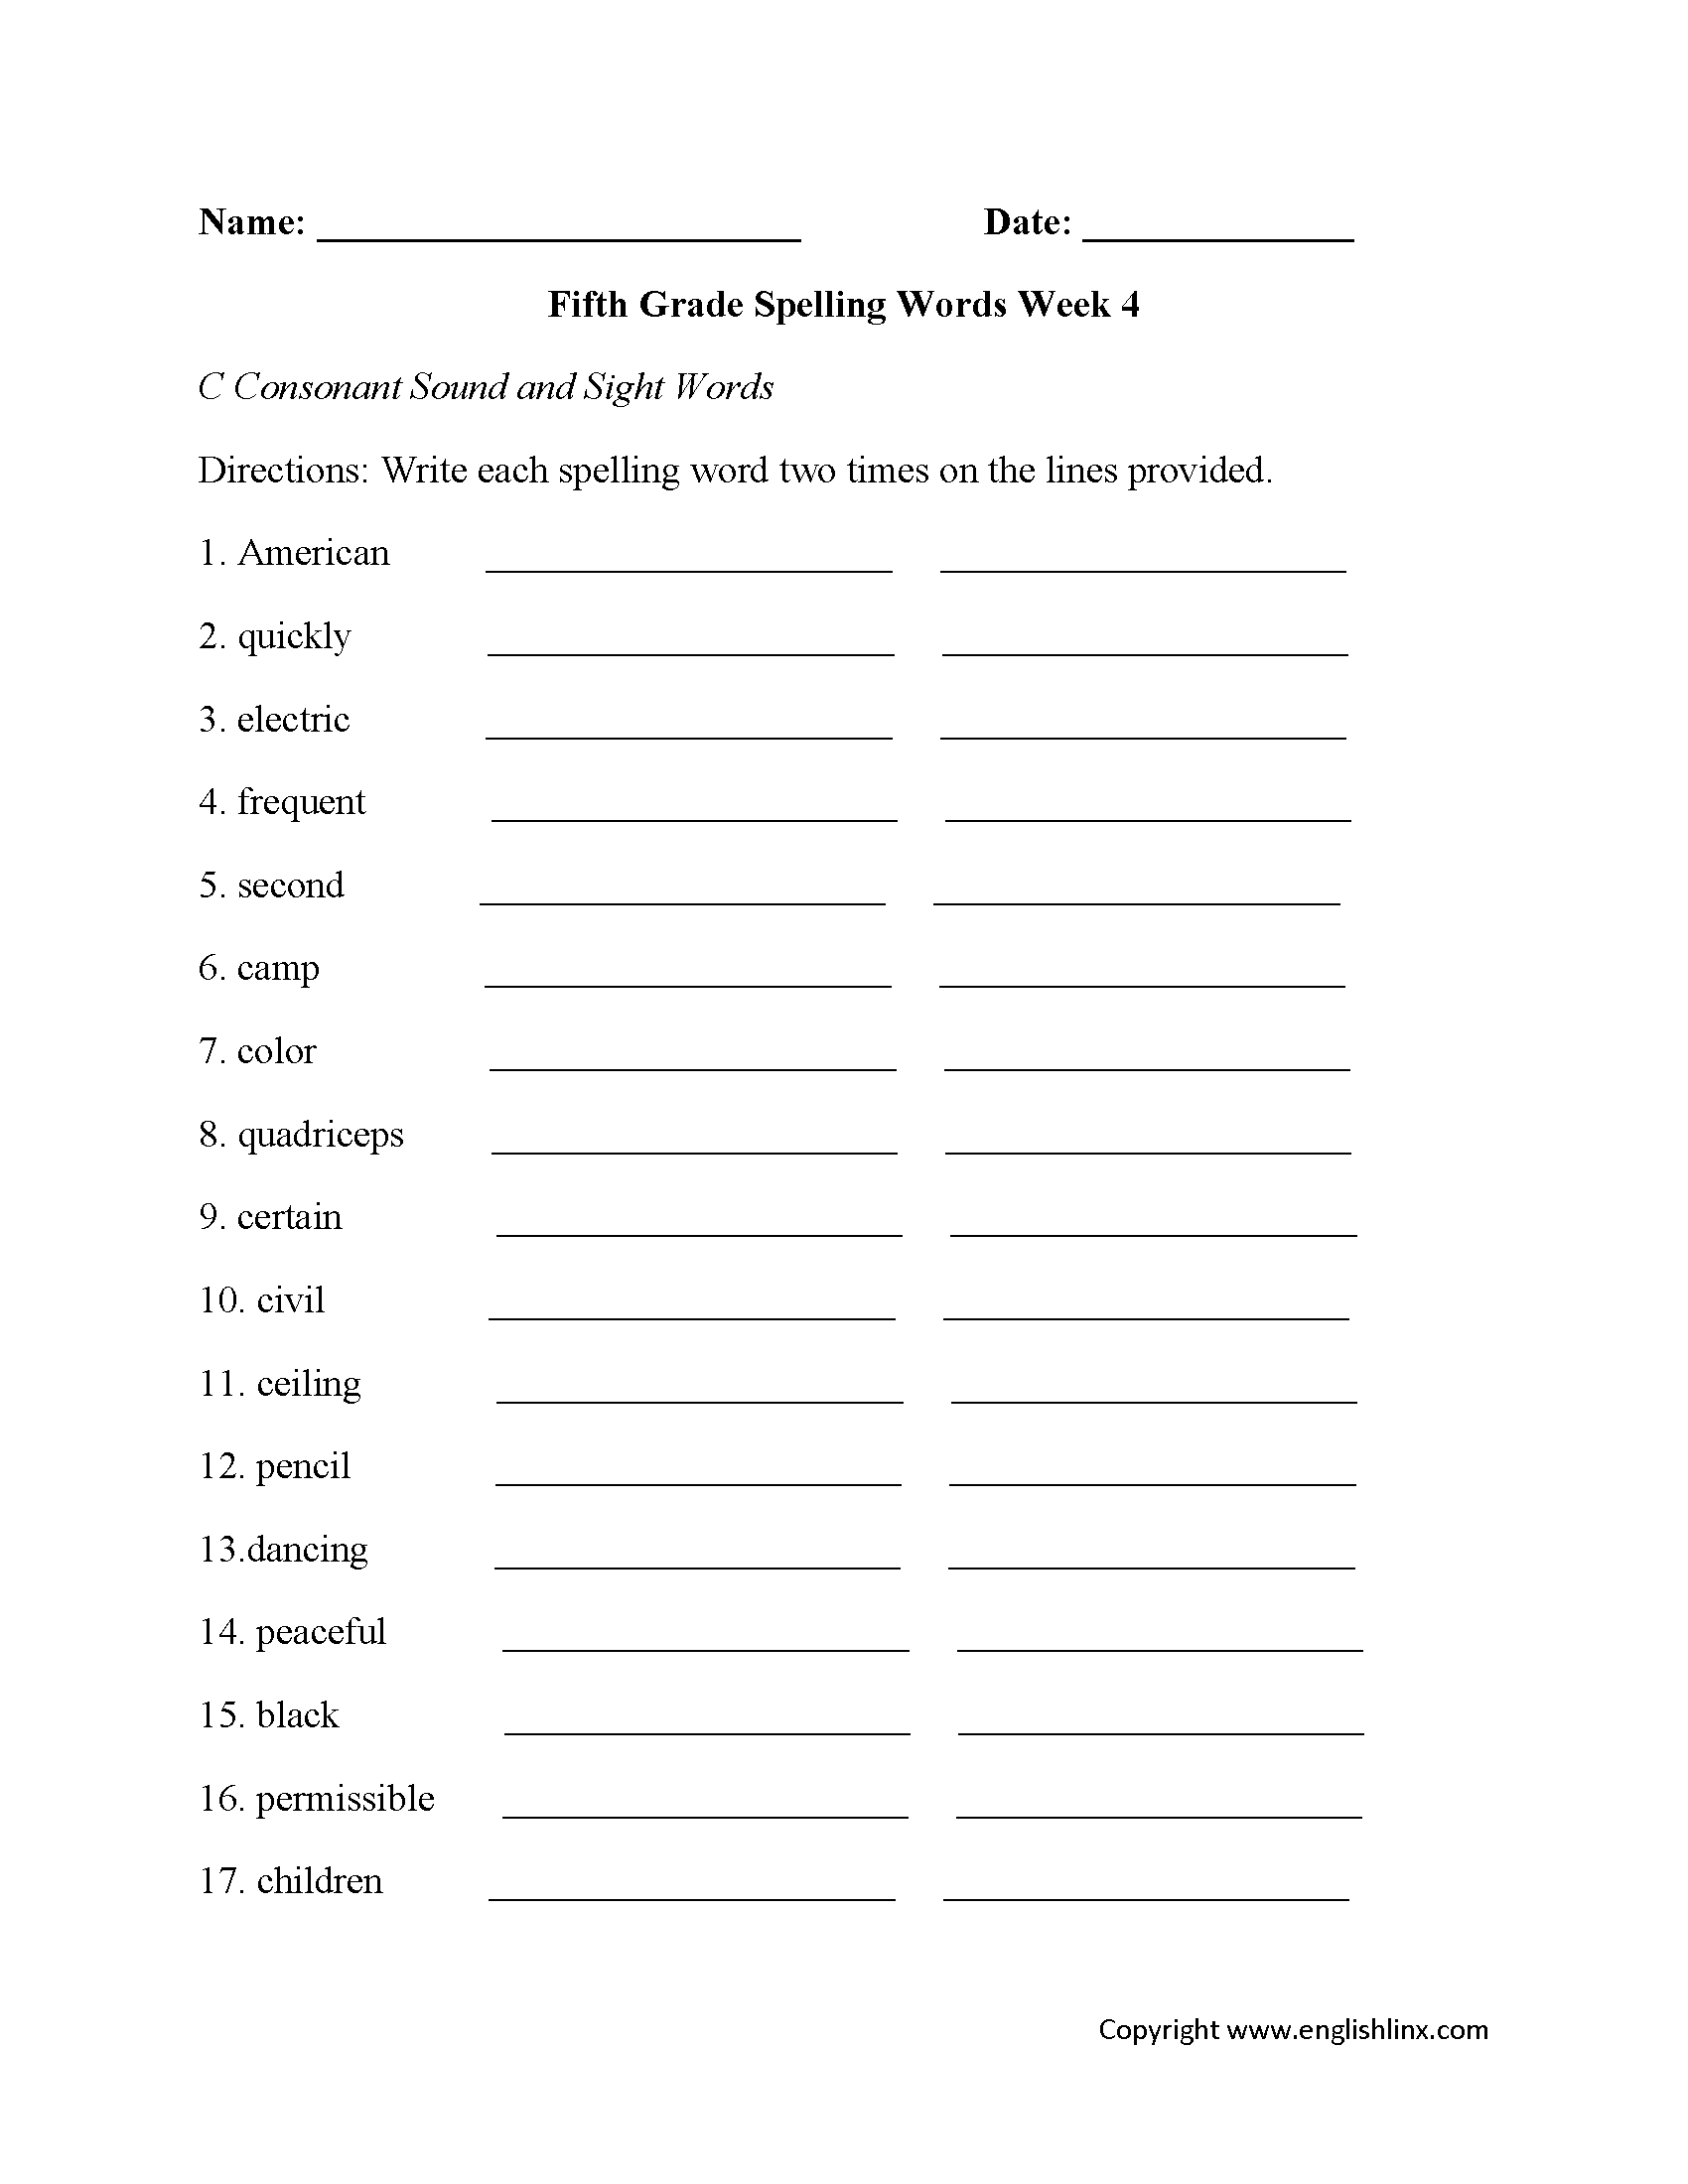 Spelling Worksheets | Fifth Grade Spelling Worksheets - 7Th Grade Spelling Worksheets Free Printable